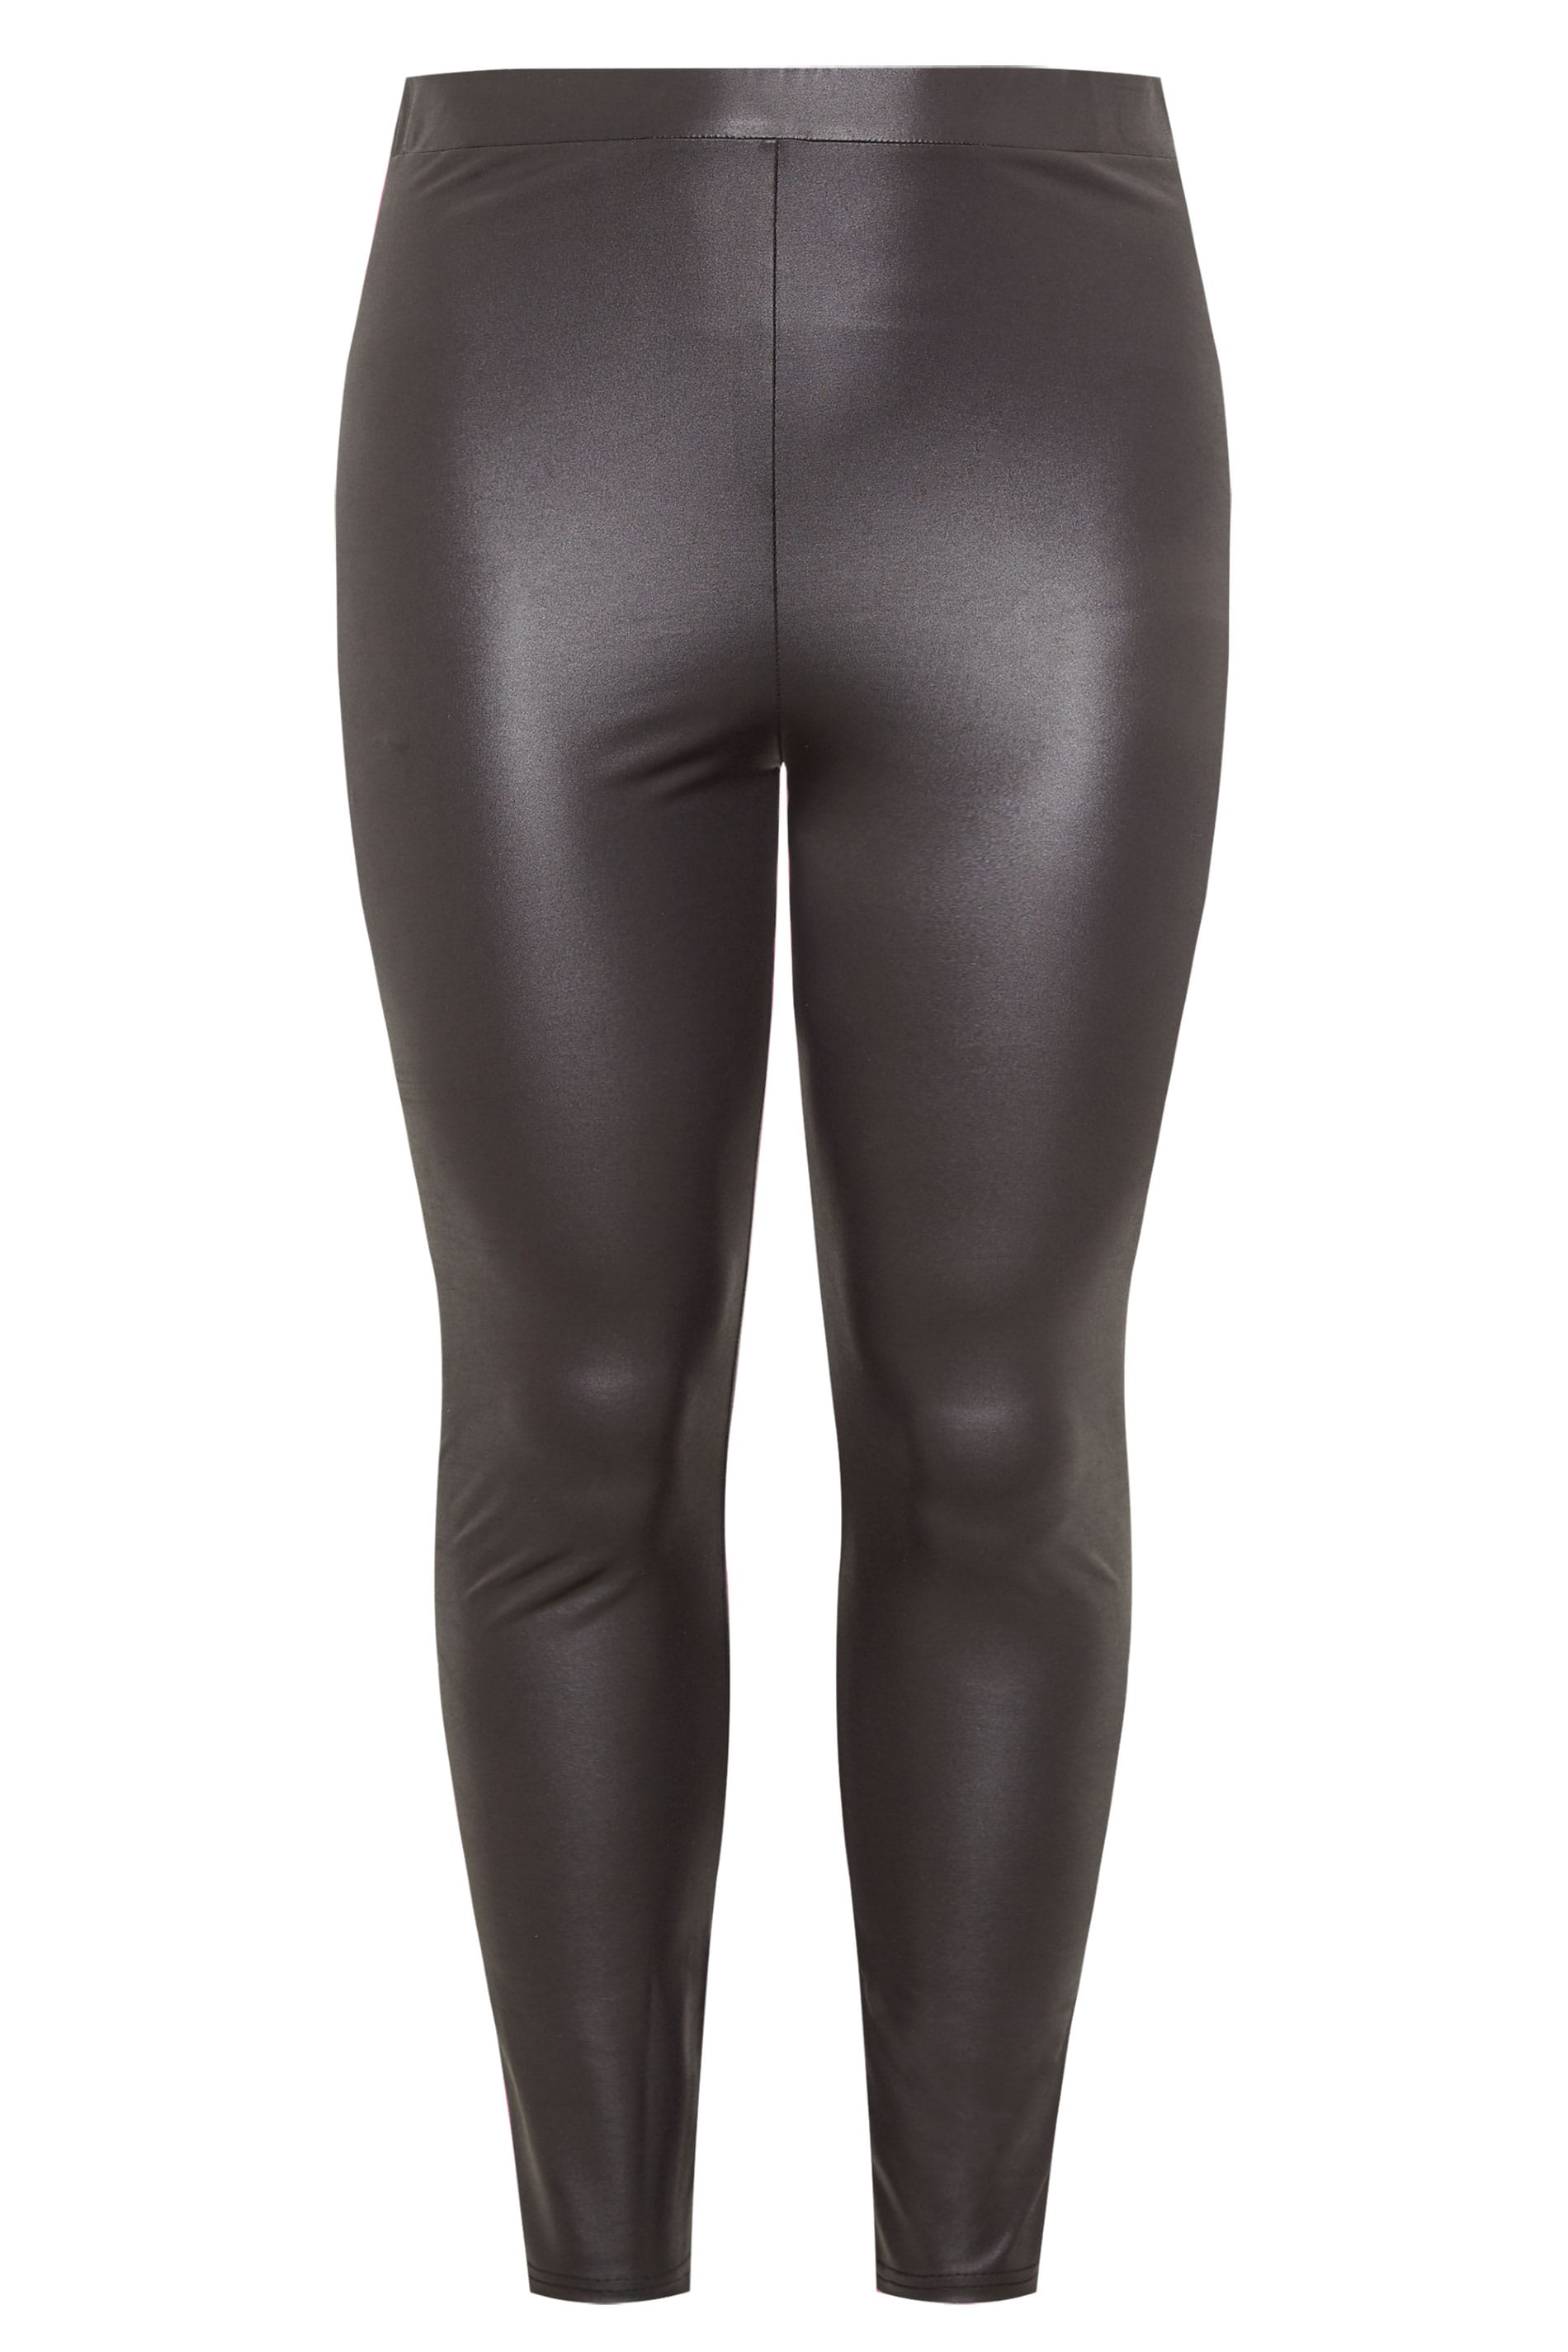 Mart bredde Sequel Plus Size Black Wet Look Stretch Leggings | Yours Clothing